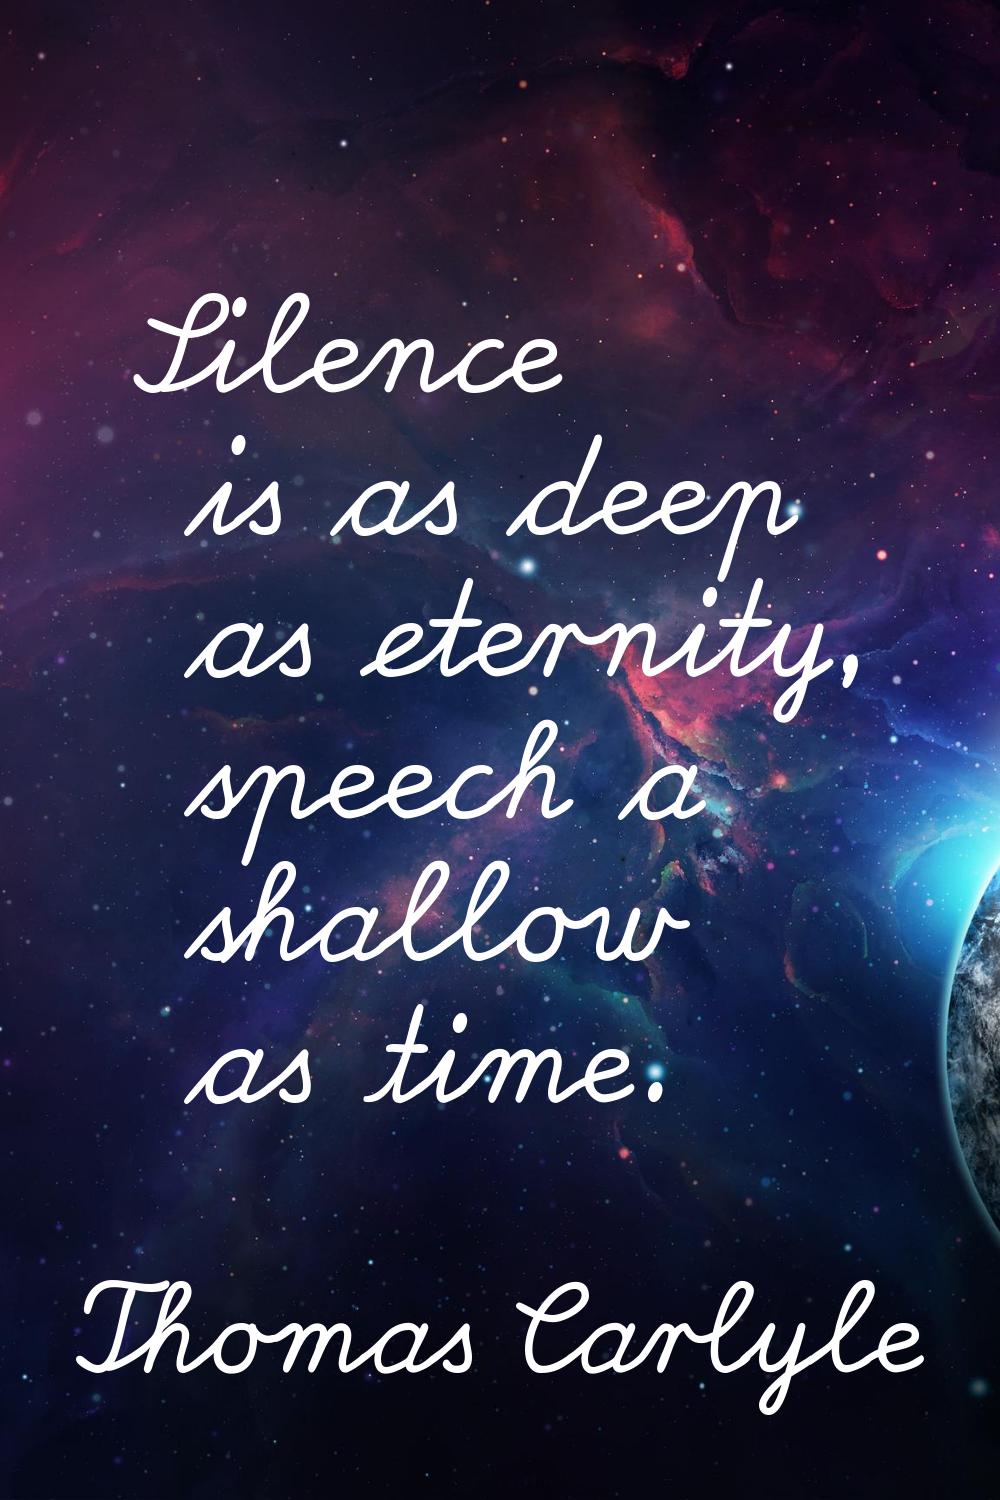 Silence is as deep as eternity, speech a shallow as time.